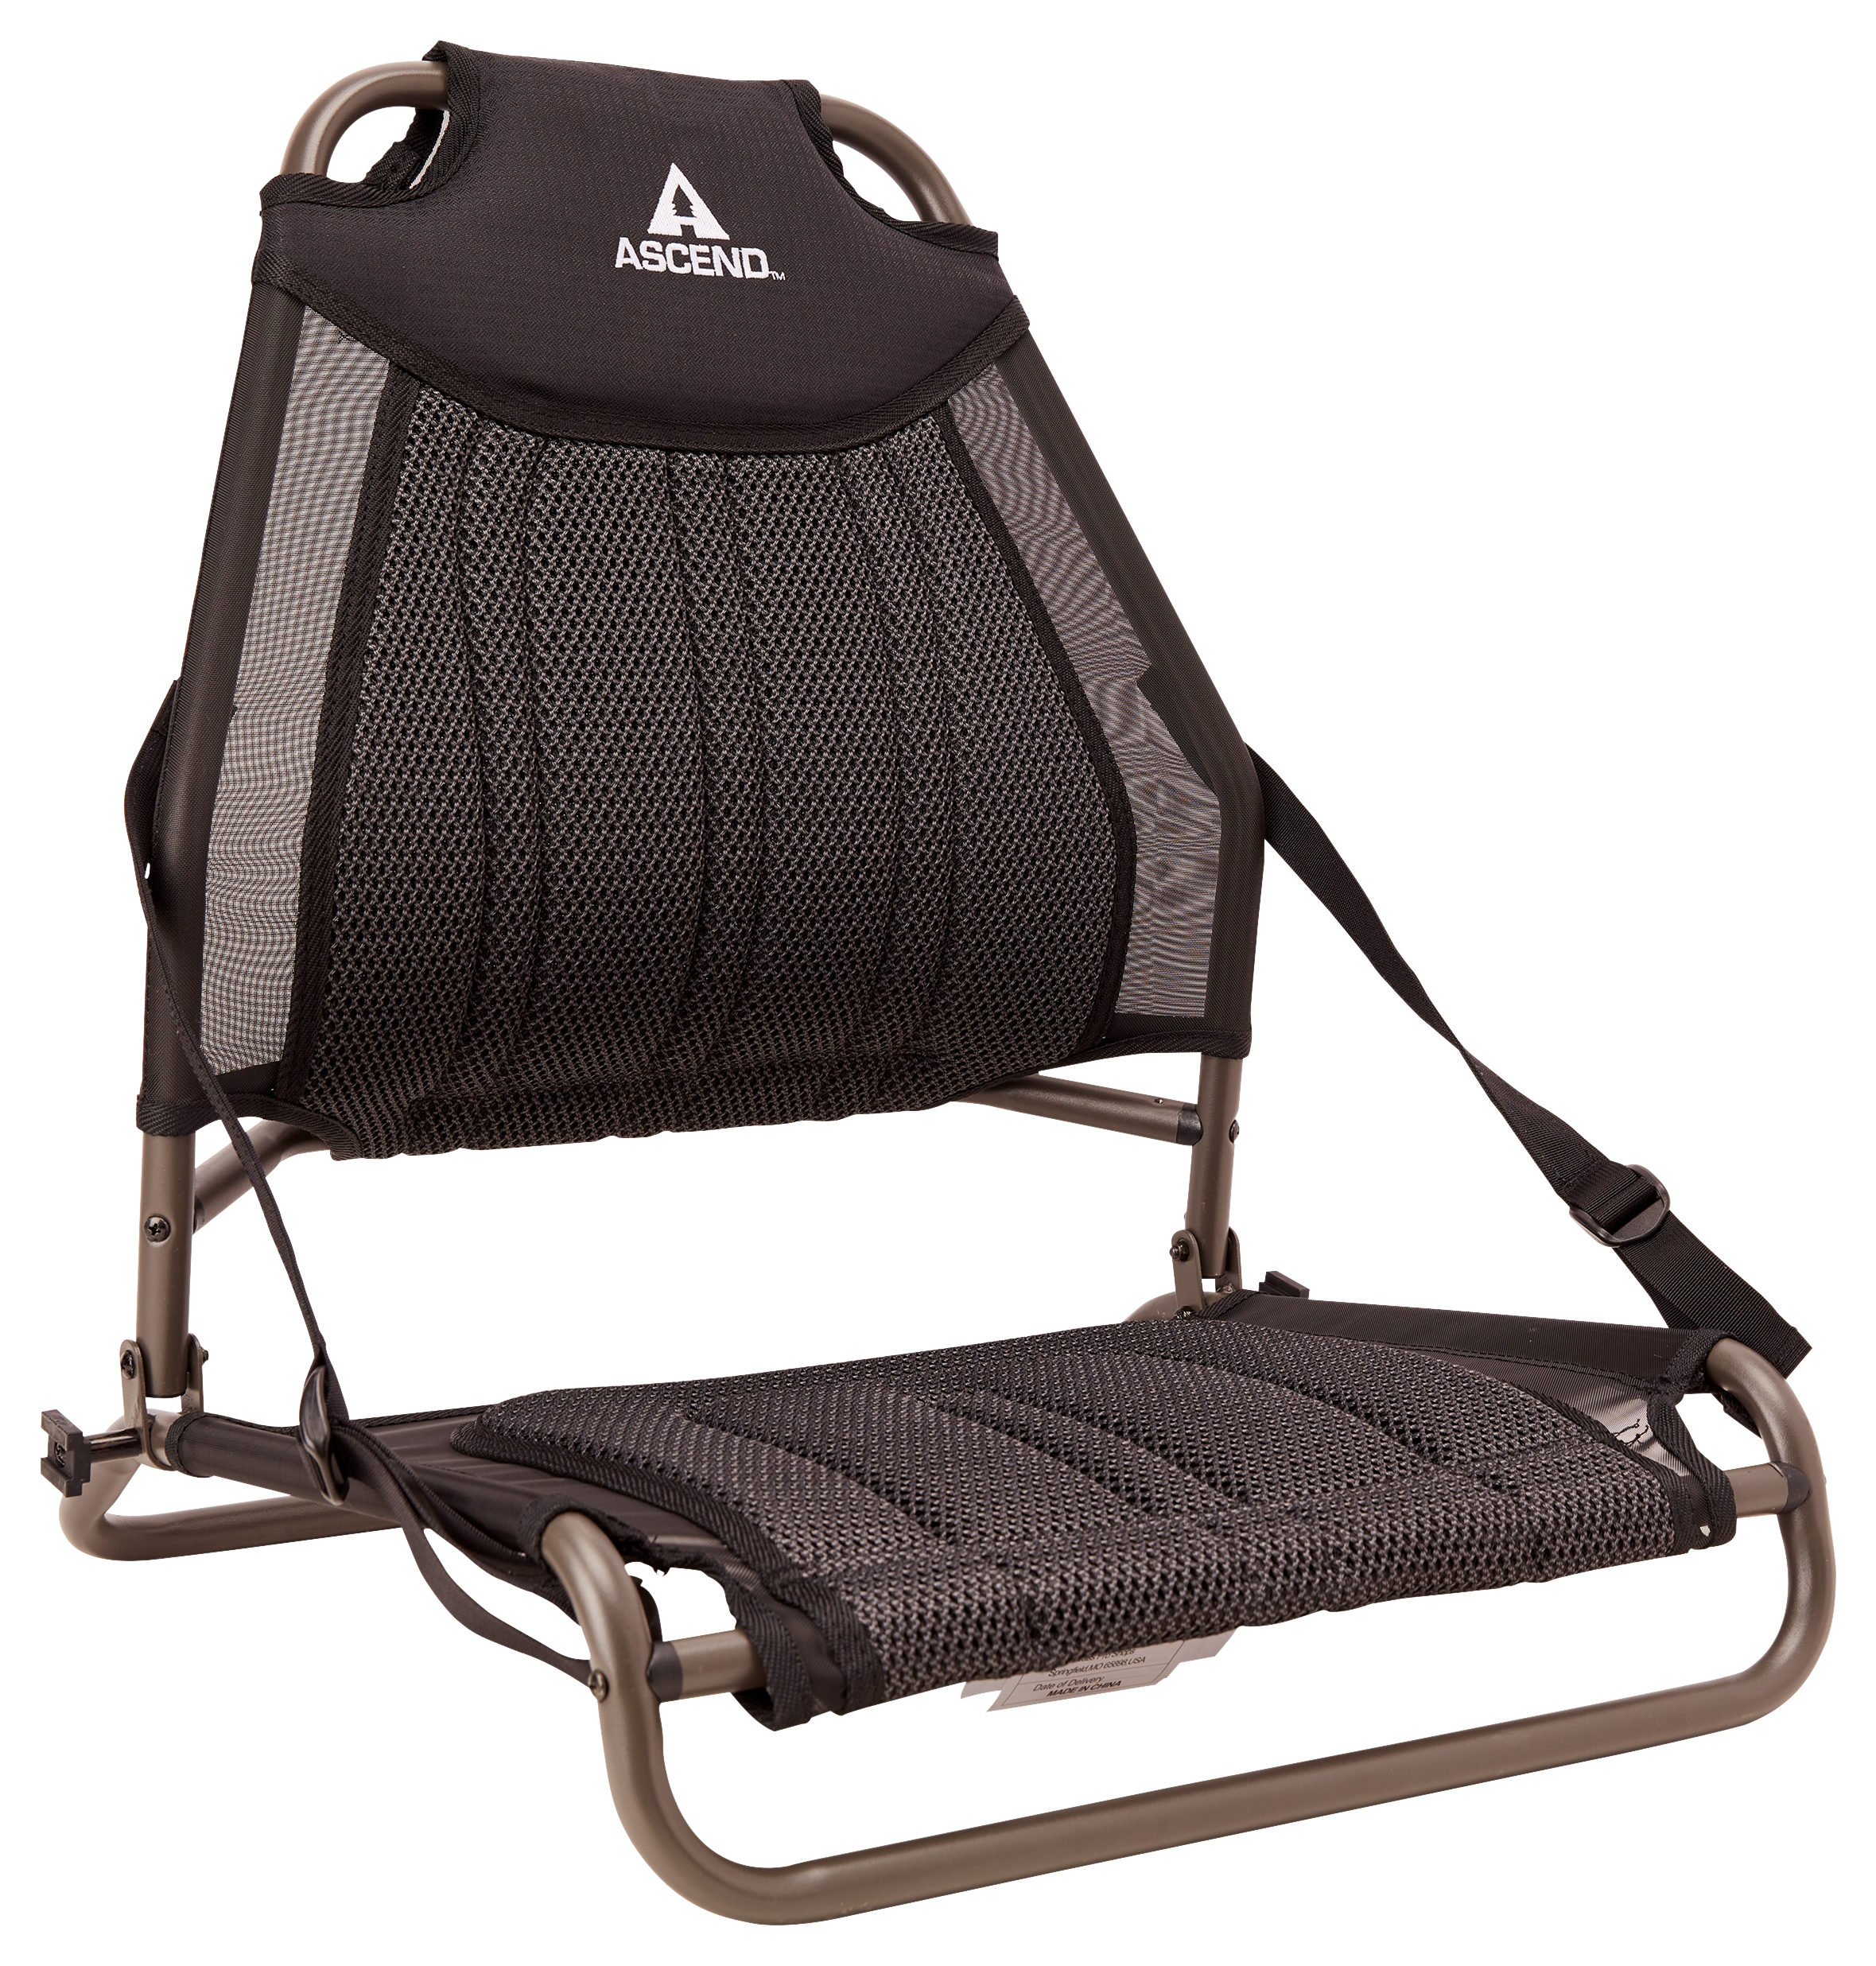 Ascend 12T Sit-On-Top Kayak Seat